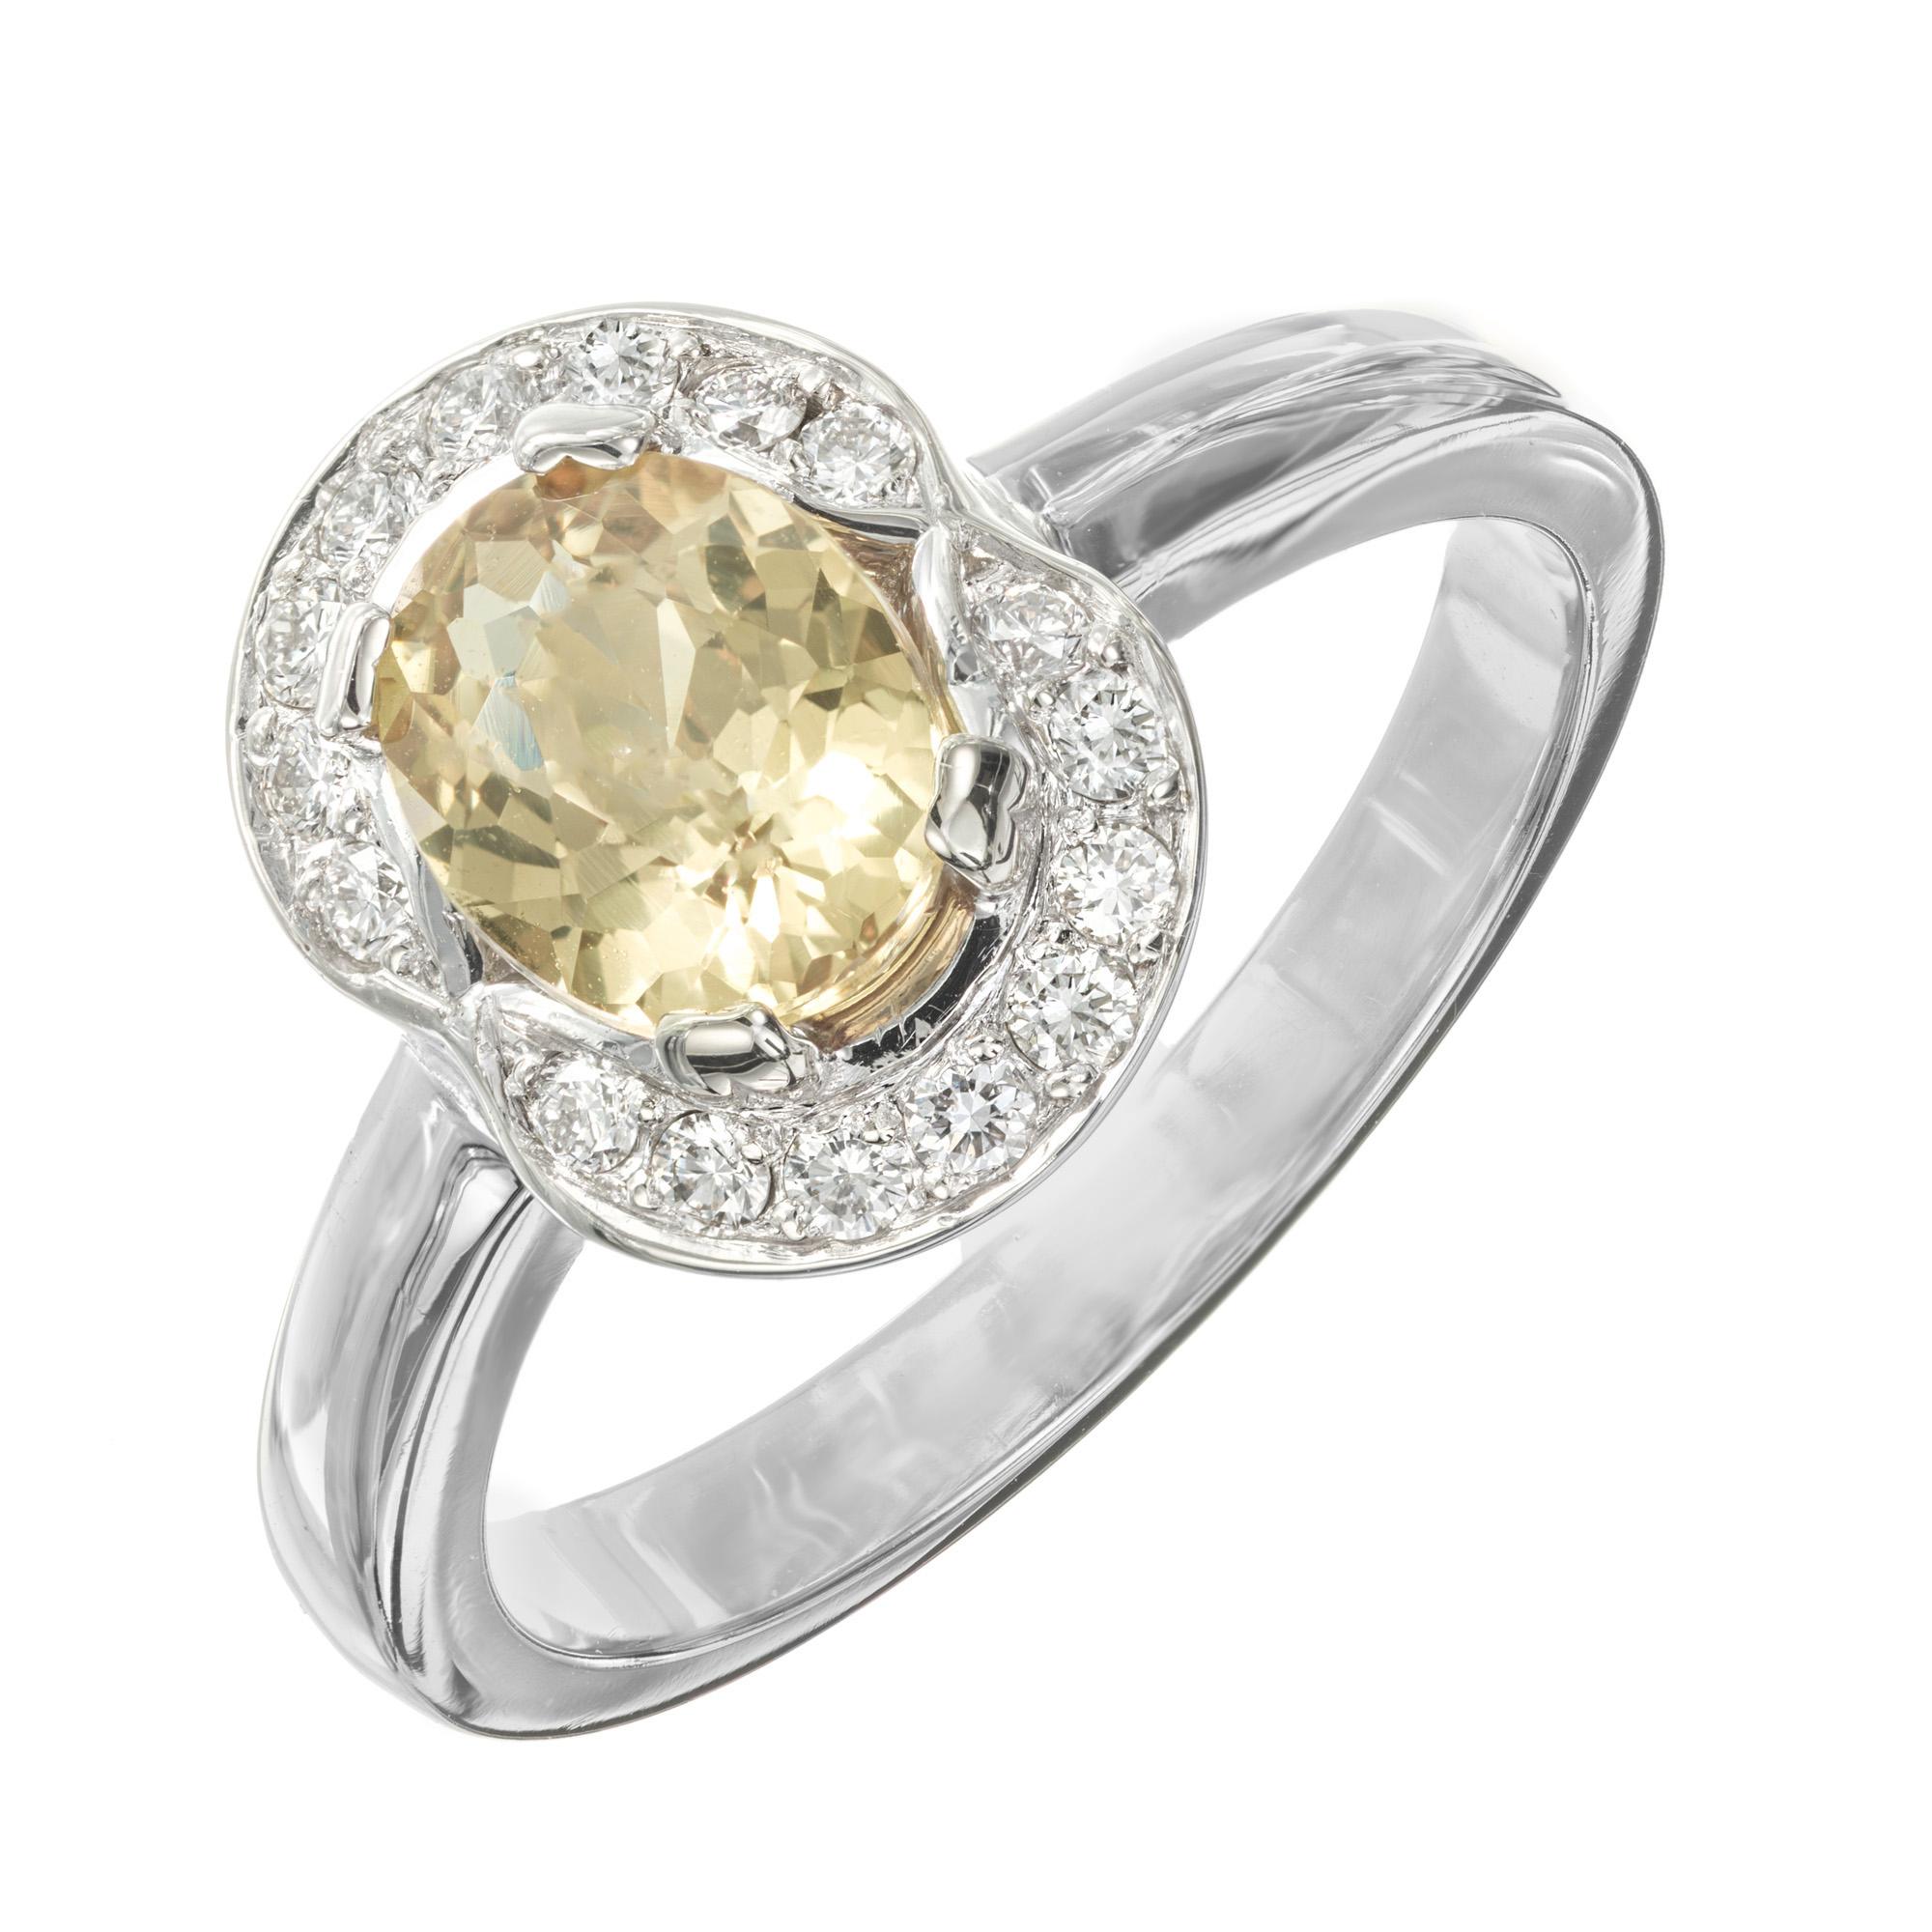 Peter Suchy GIA Certified 1.16 Carat Orange Sapphire Diamond White Gold Ring